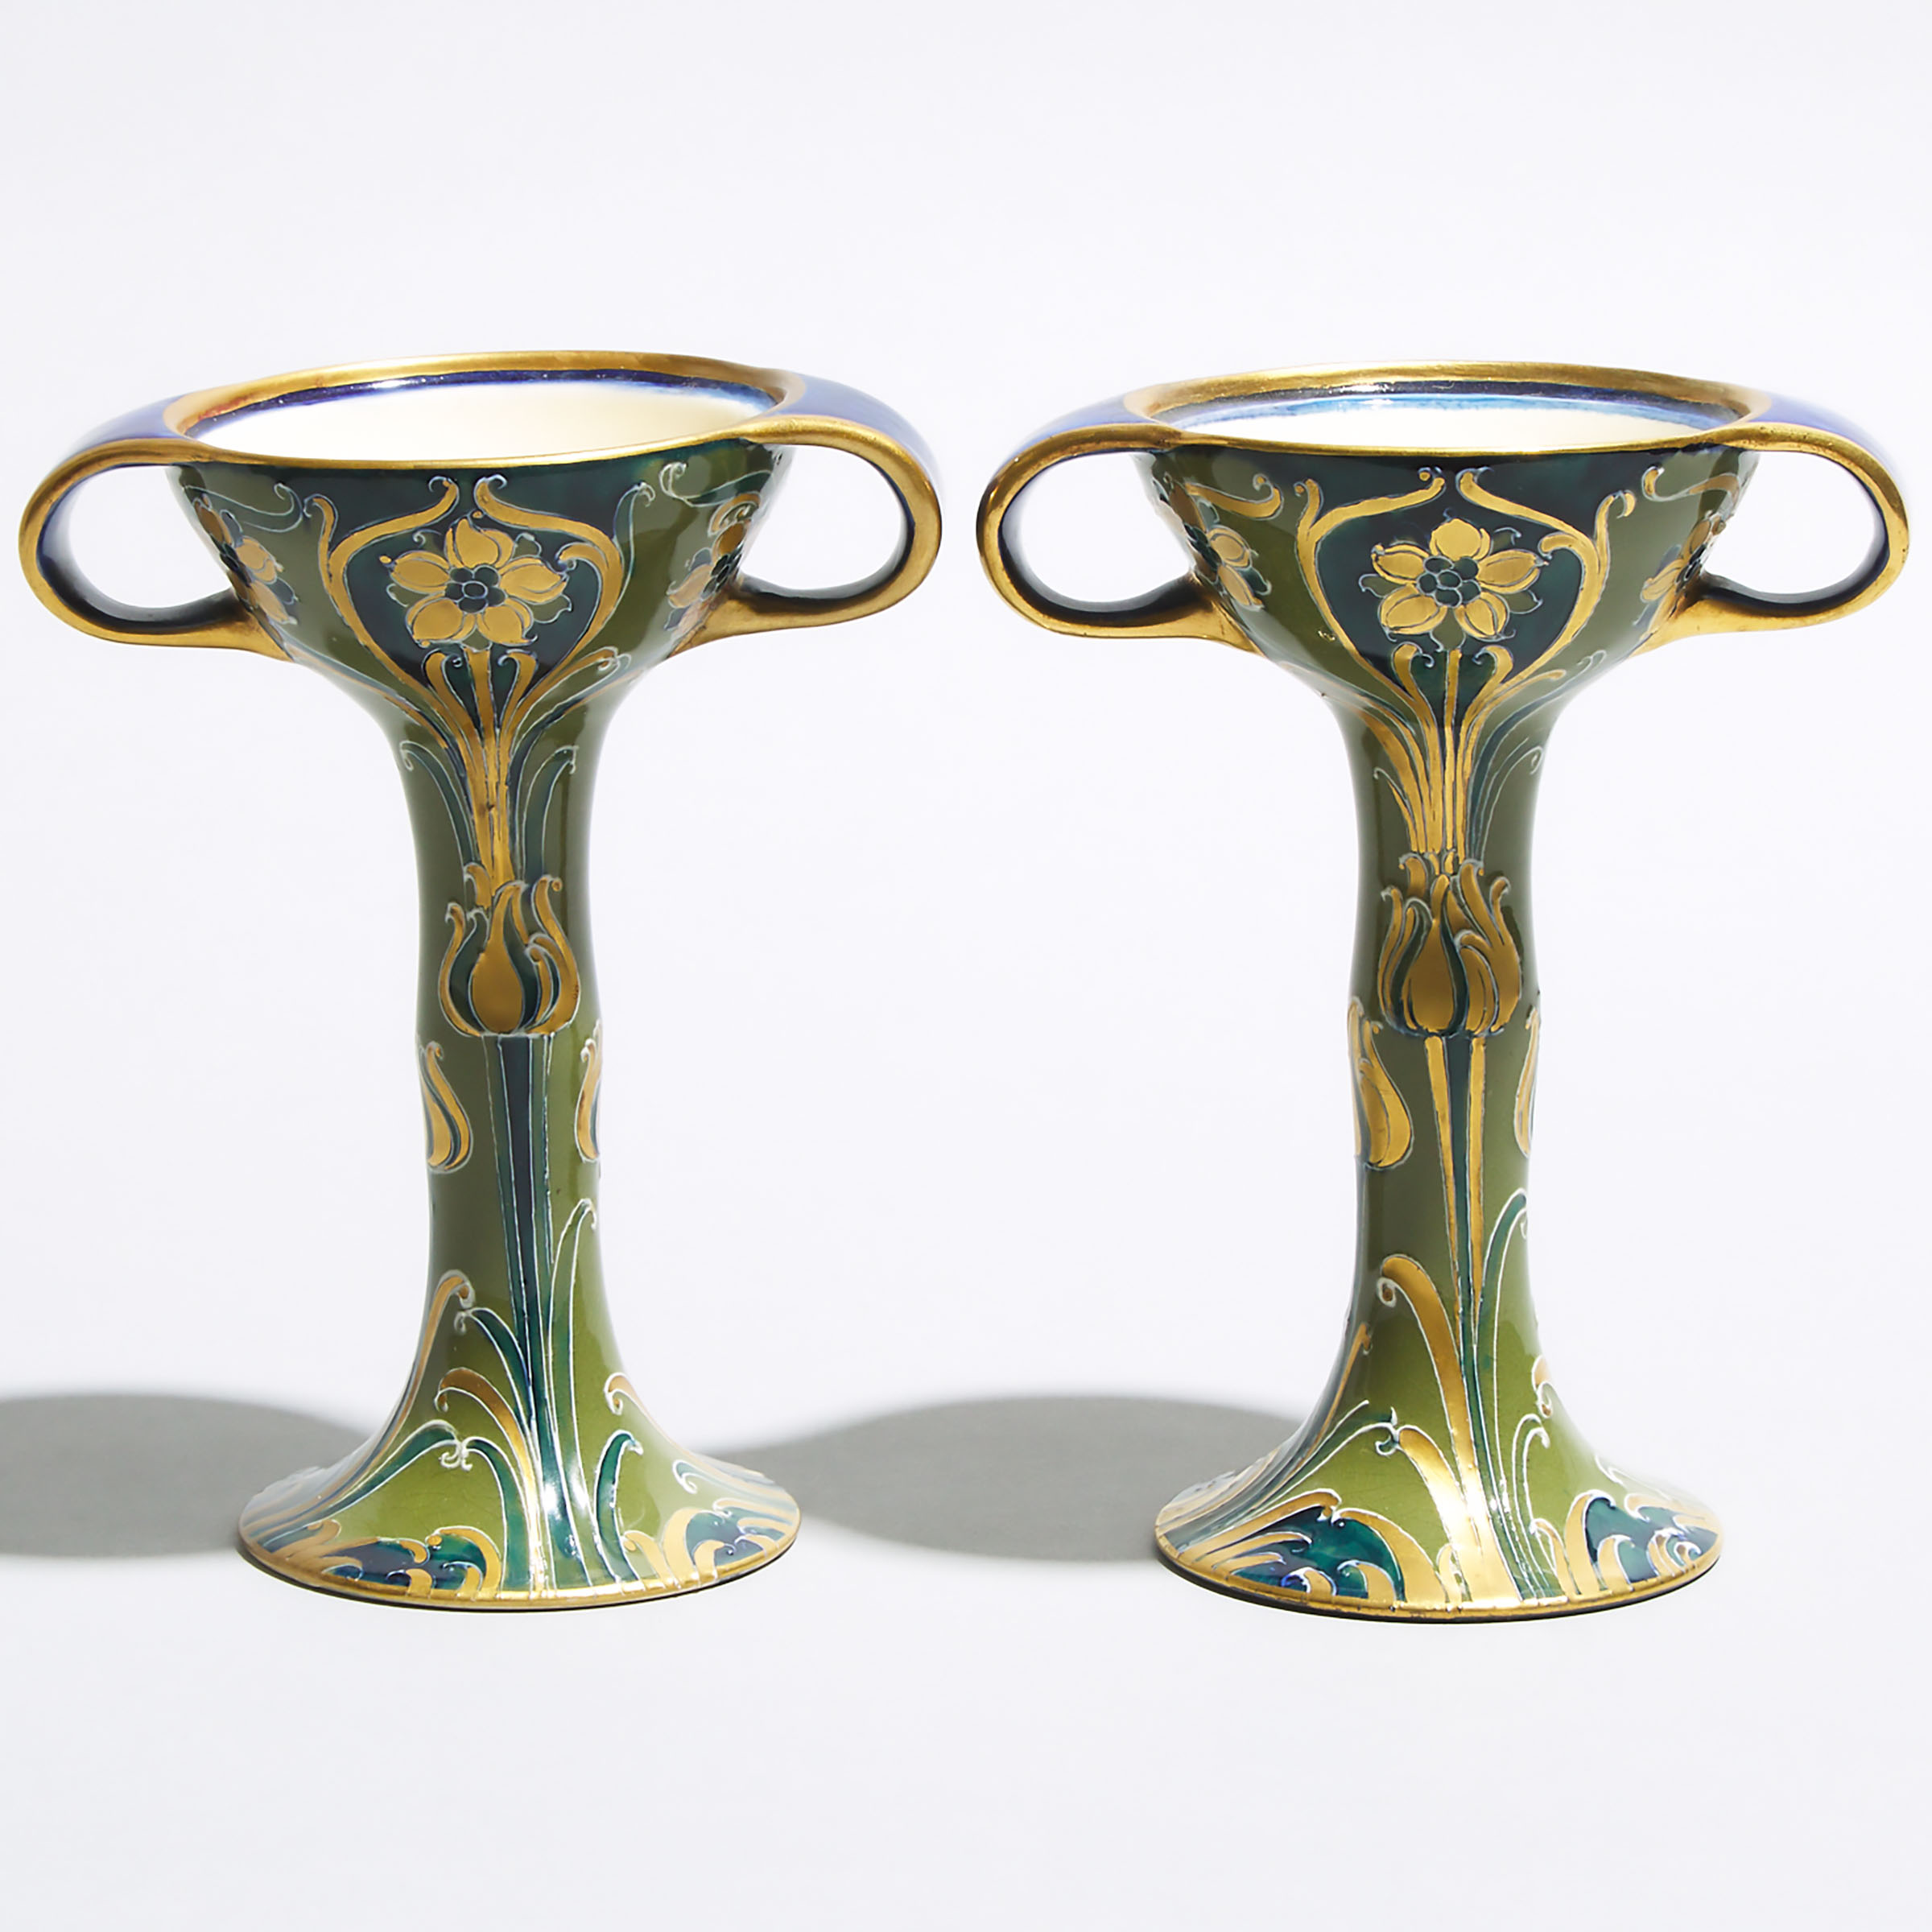 Pair of Macintyre Moorcroft Green and Gold Florian Small Bonbonnières, c.1903